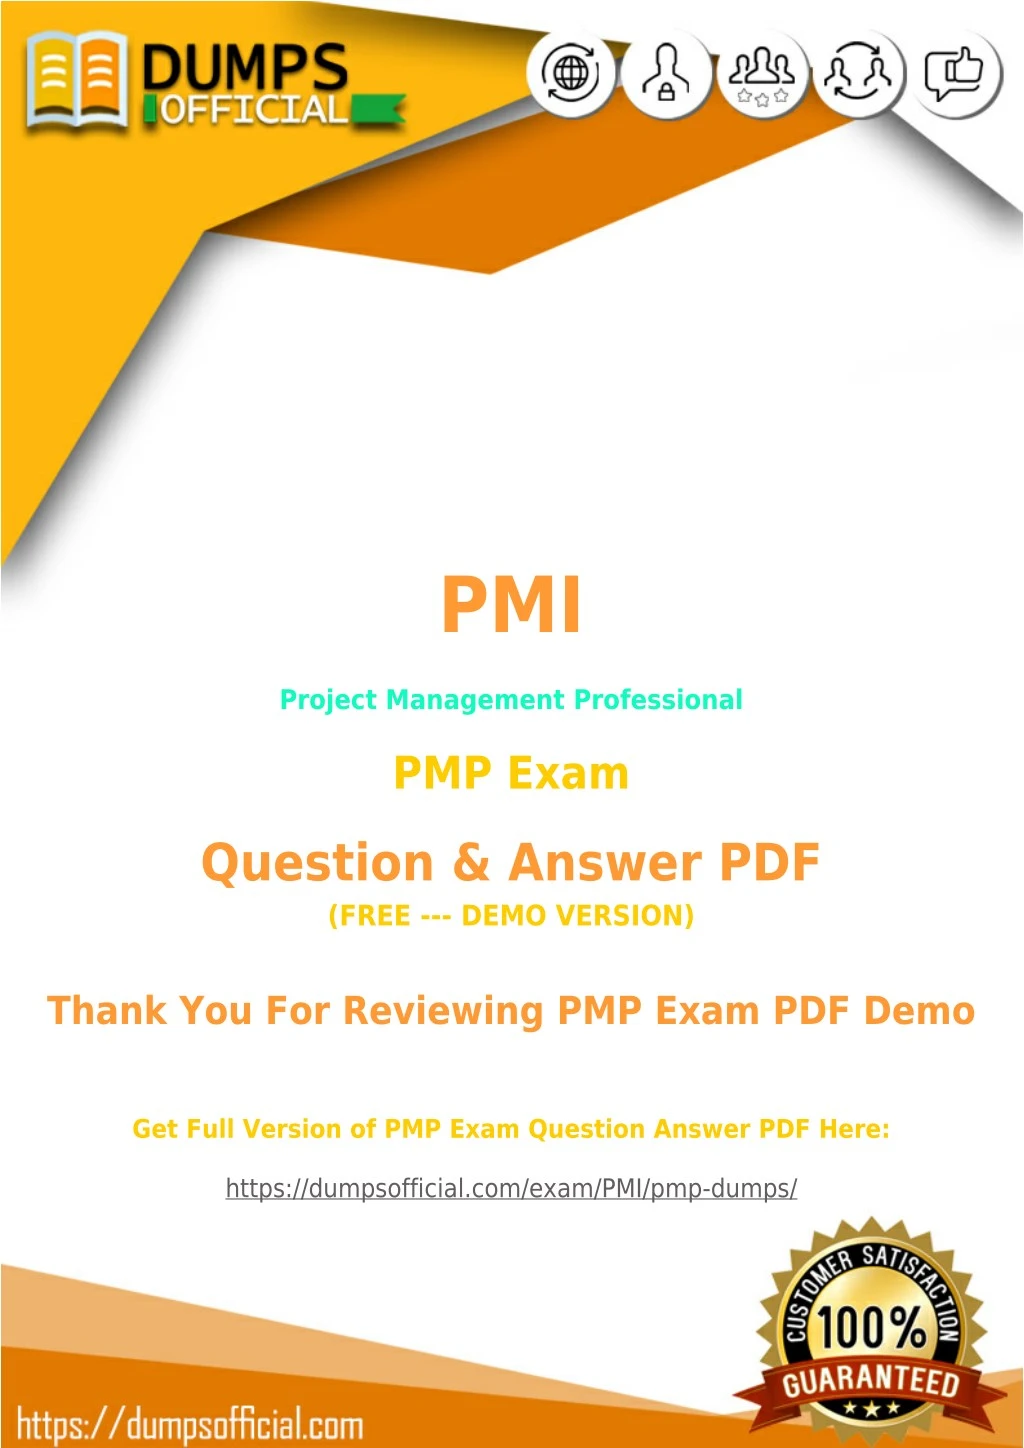 PMP Exam Registration